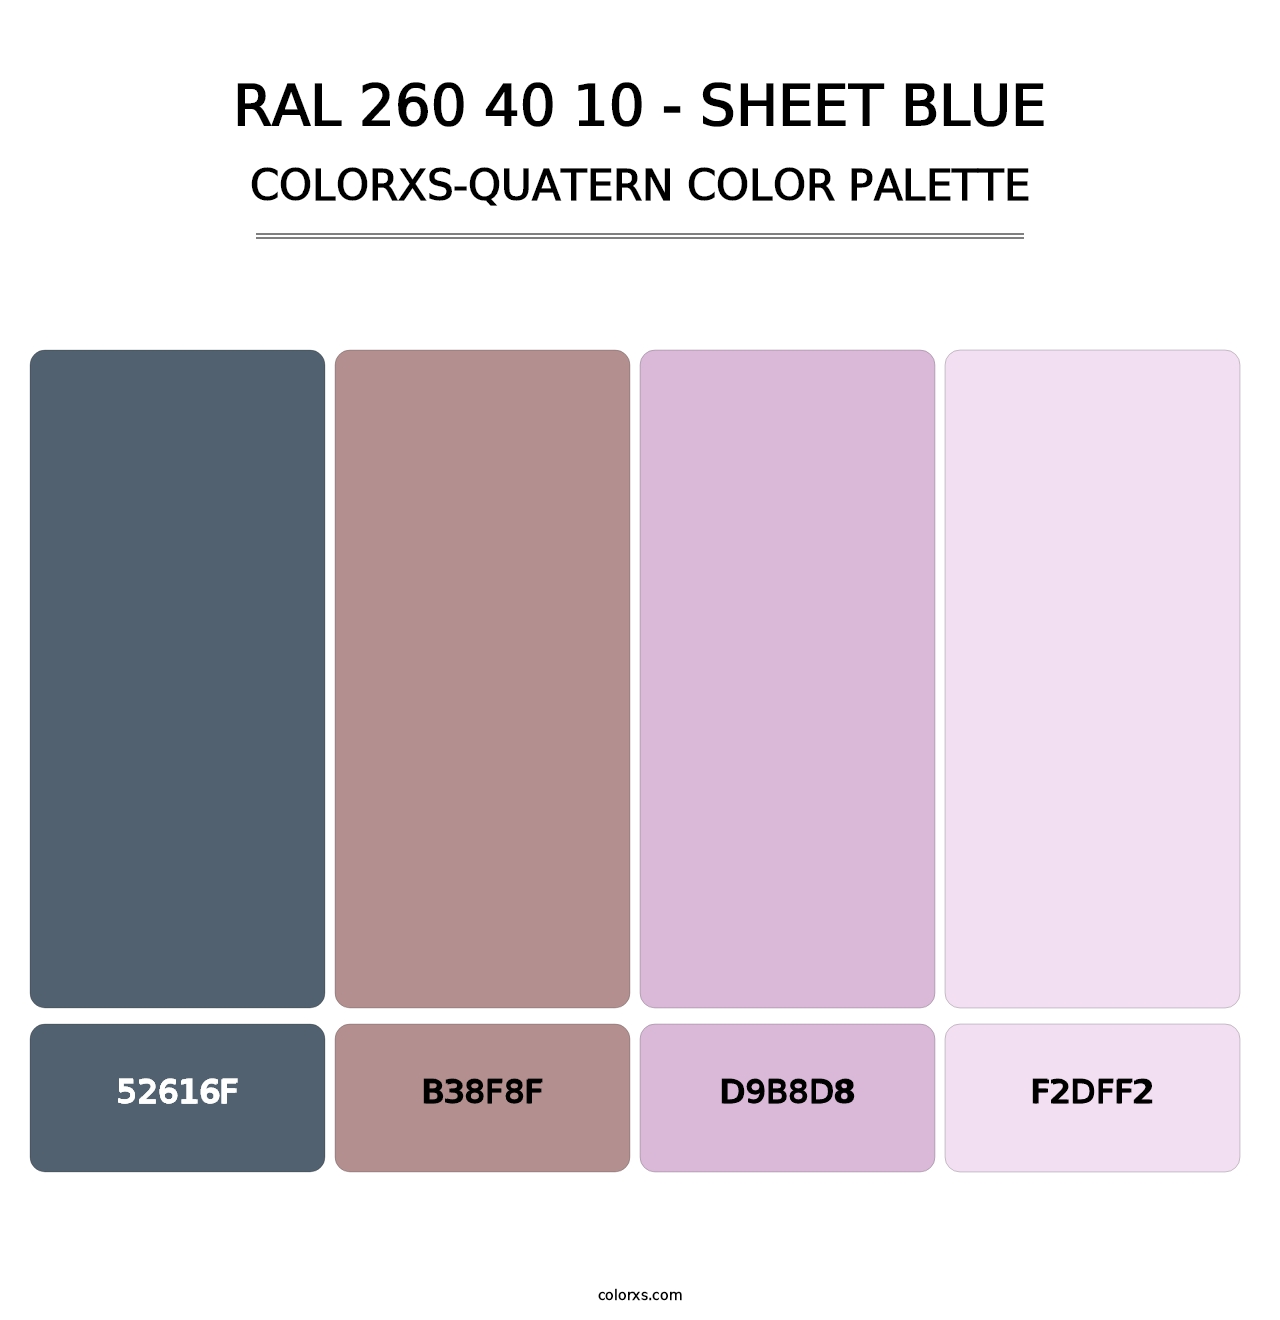 RAL 260 40 10 - Sheet Blue - Colorxs Quatern Palette